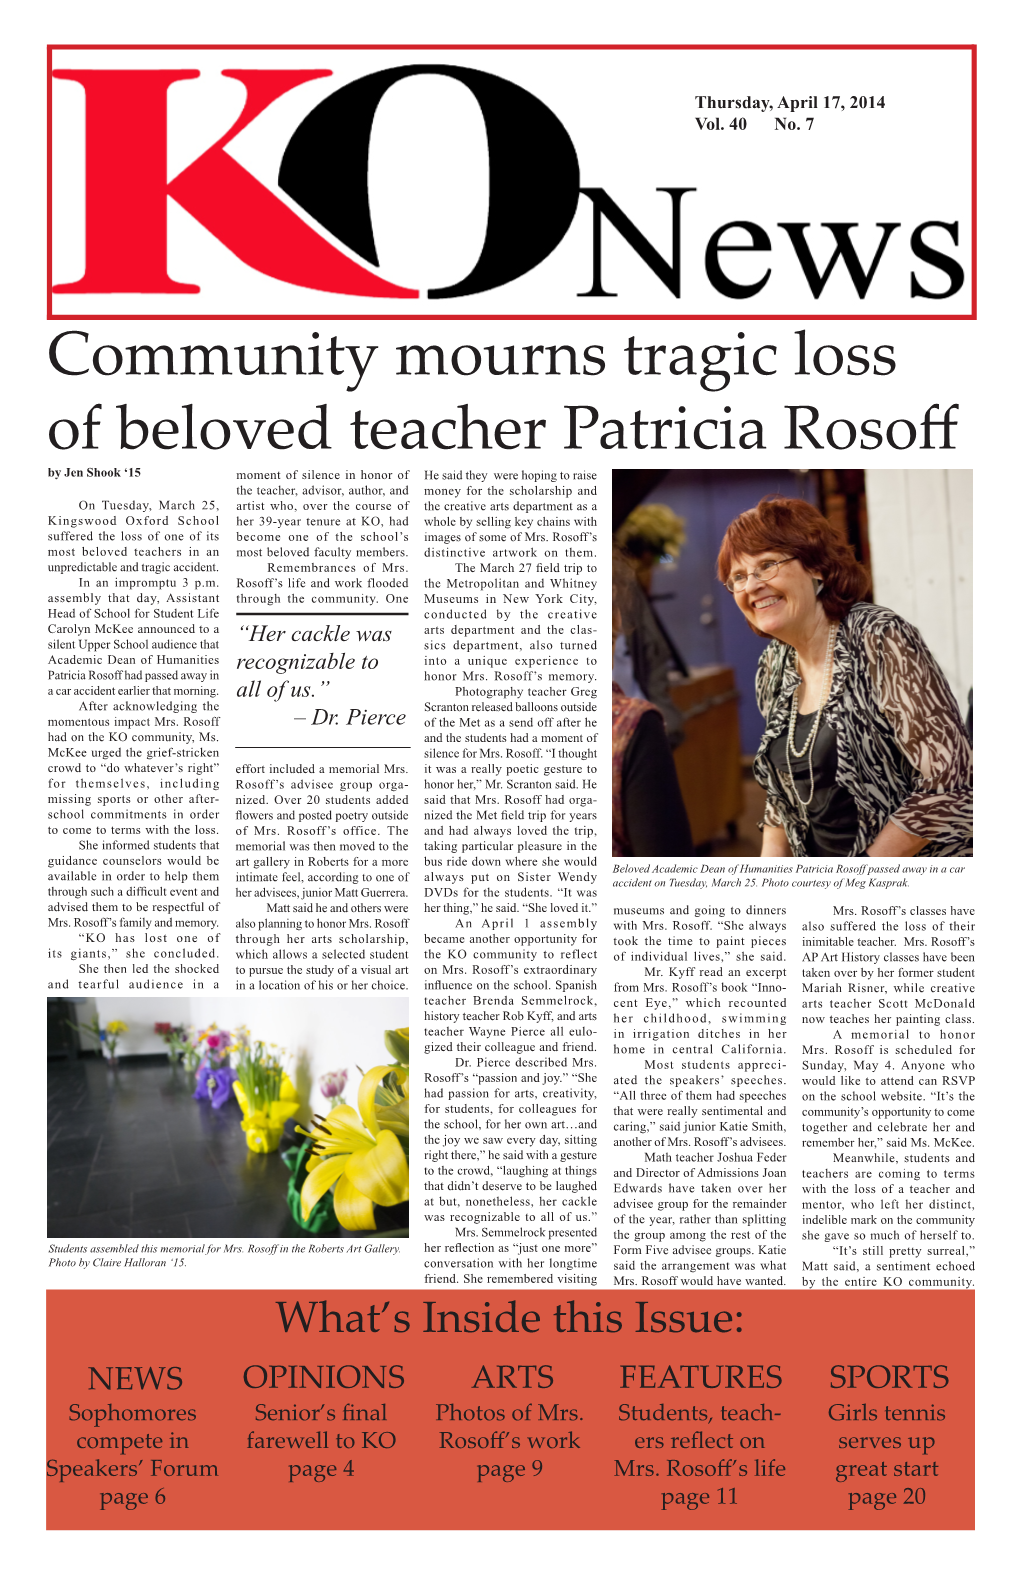 Community Mourns Tragic Loss of Beloved Teacher Patricia Rosoff